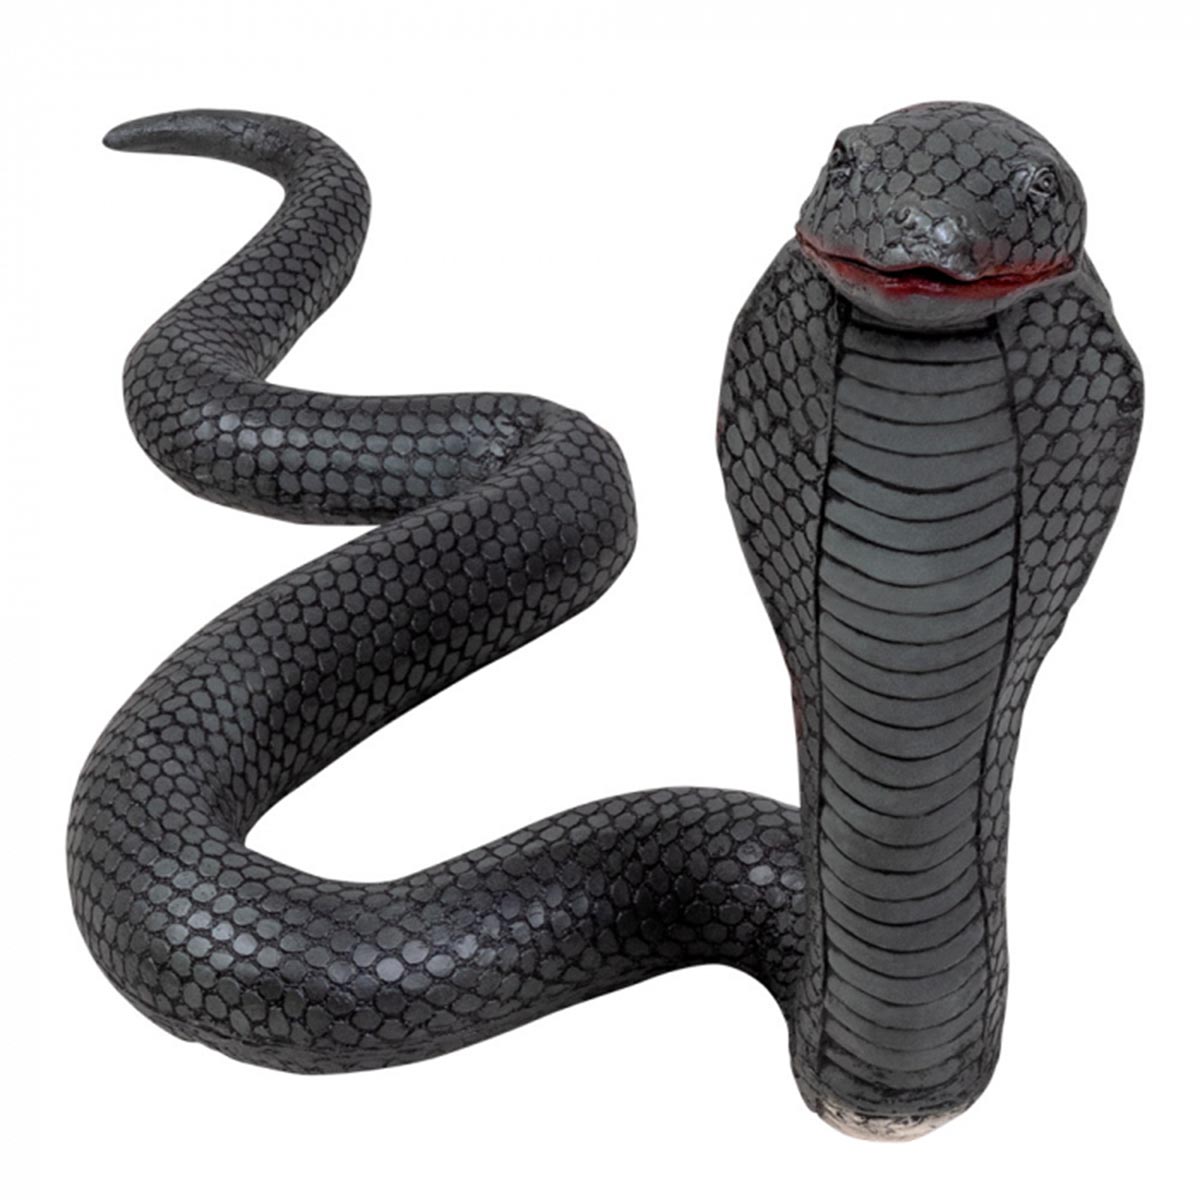 Orm svart kobra 65 cm